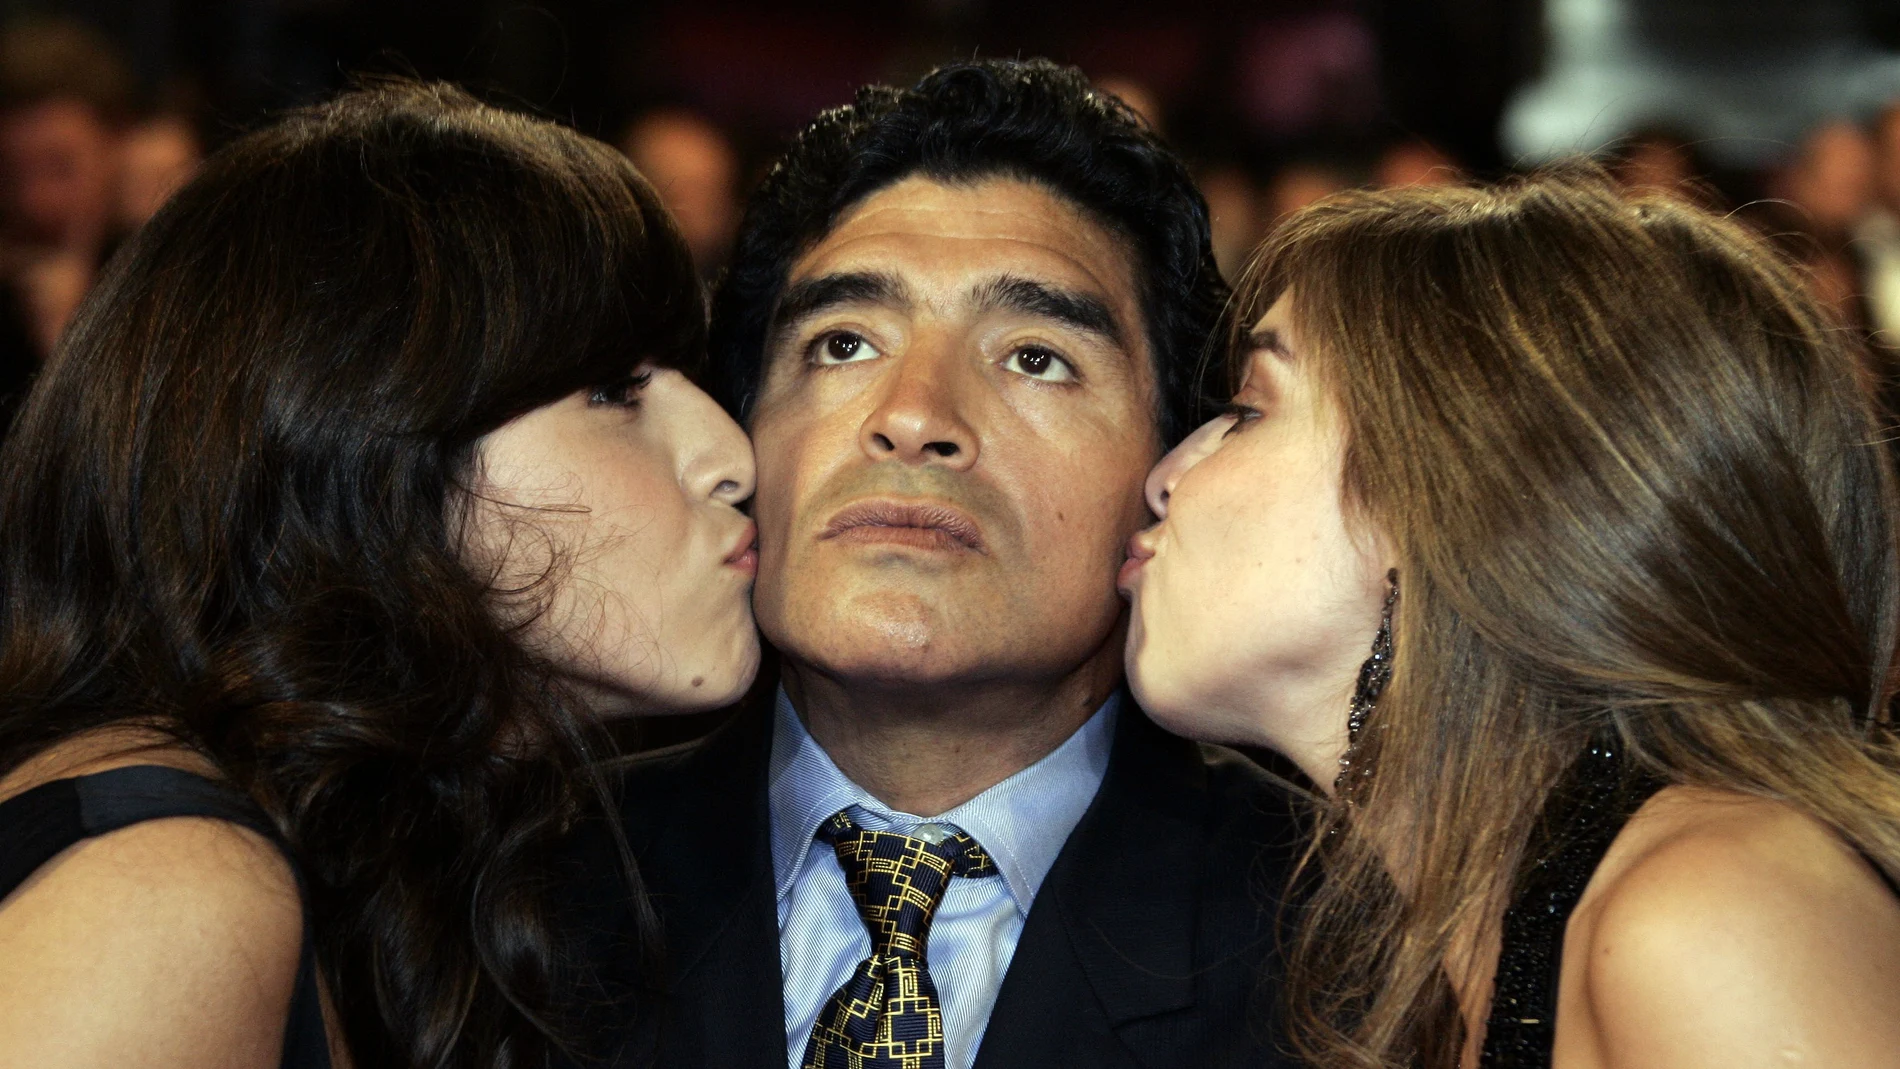 Giannina y Dalma, junto a su padre, Diego ArmandoMaradona. (AP Photo/Francois Mori, File)